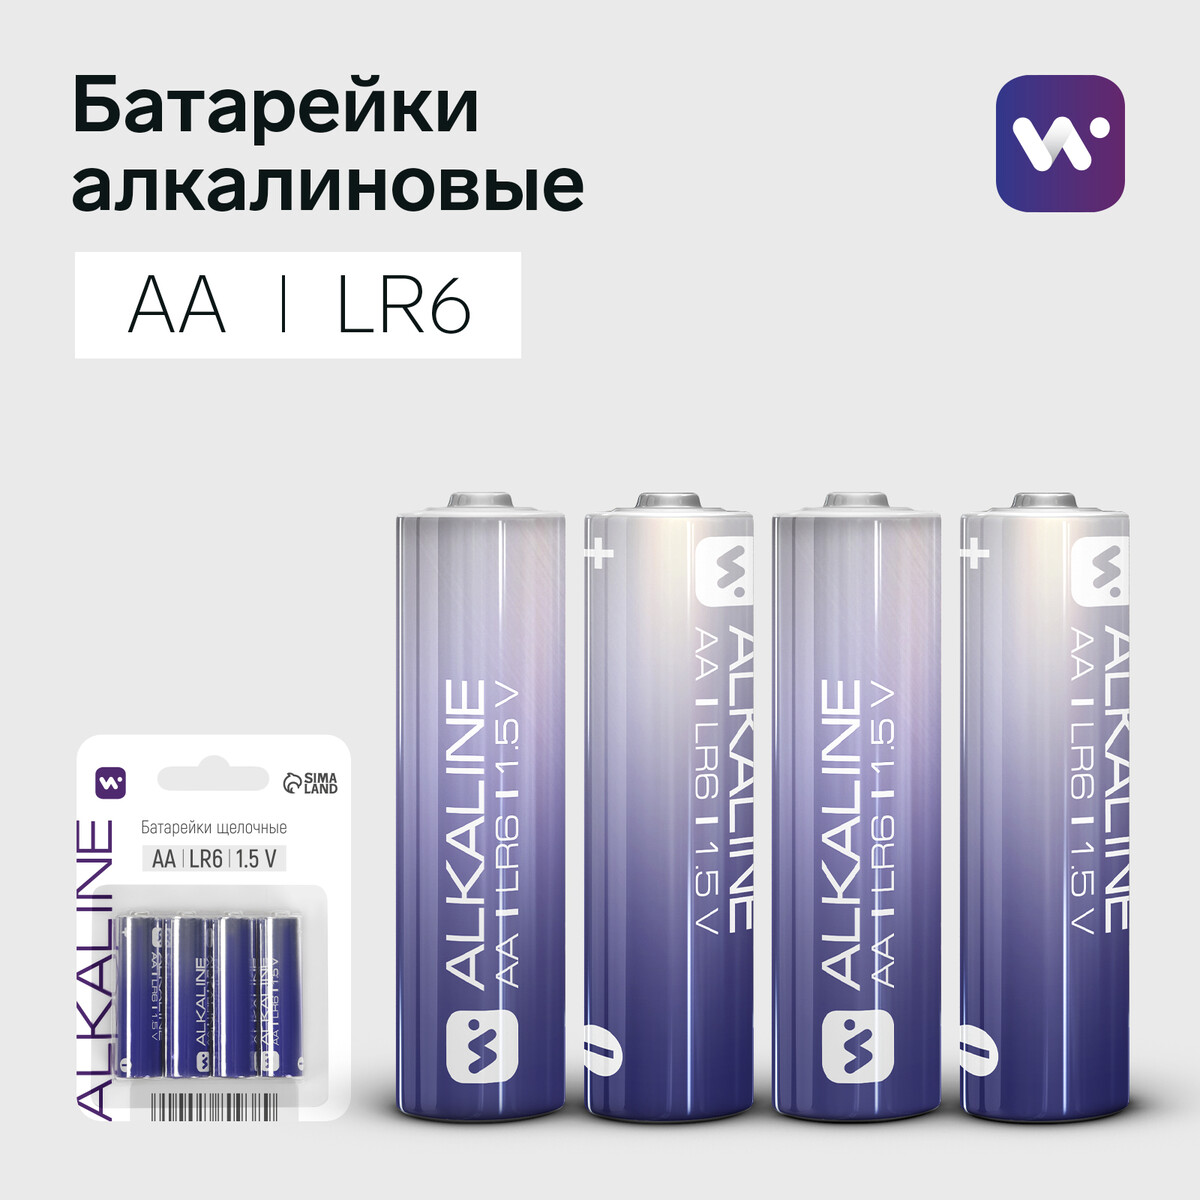 Батарейка алкалиновая windigo, aa, lr6, блистер, 4 шт батарейка ergolux аа lr06 lr6 alkaline алкалиновая 1 5 в коробка 12 шт 11749